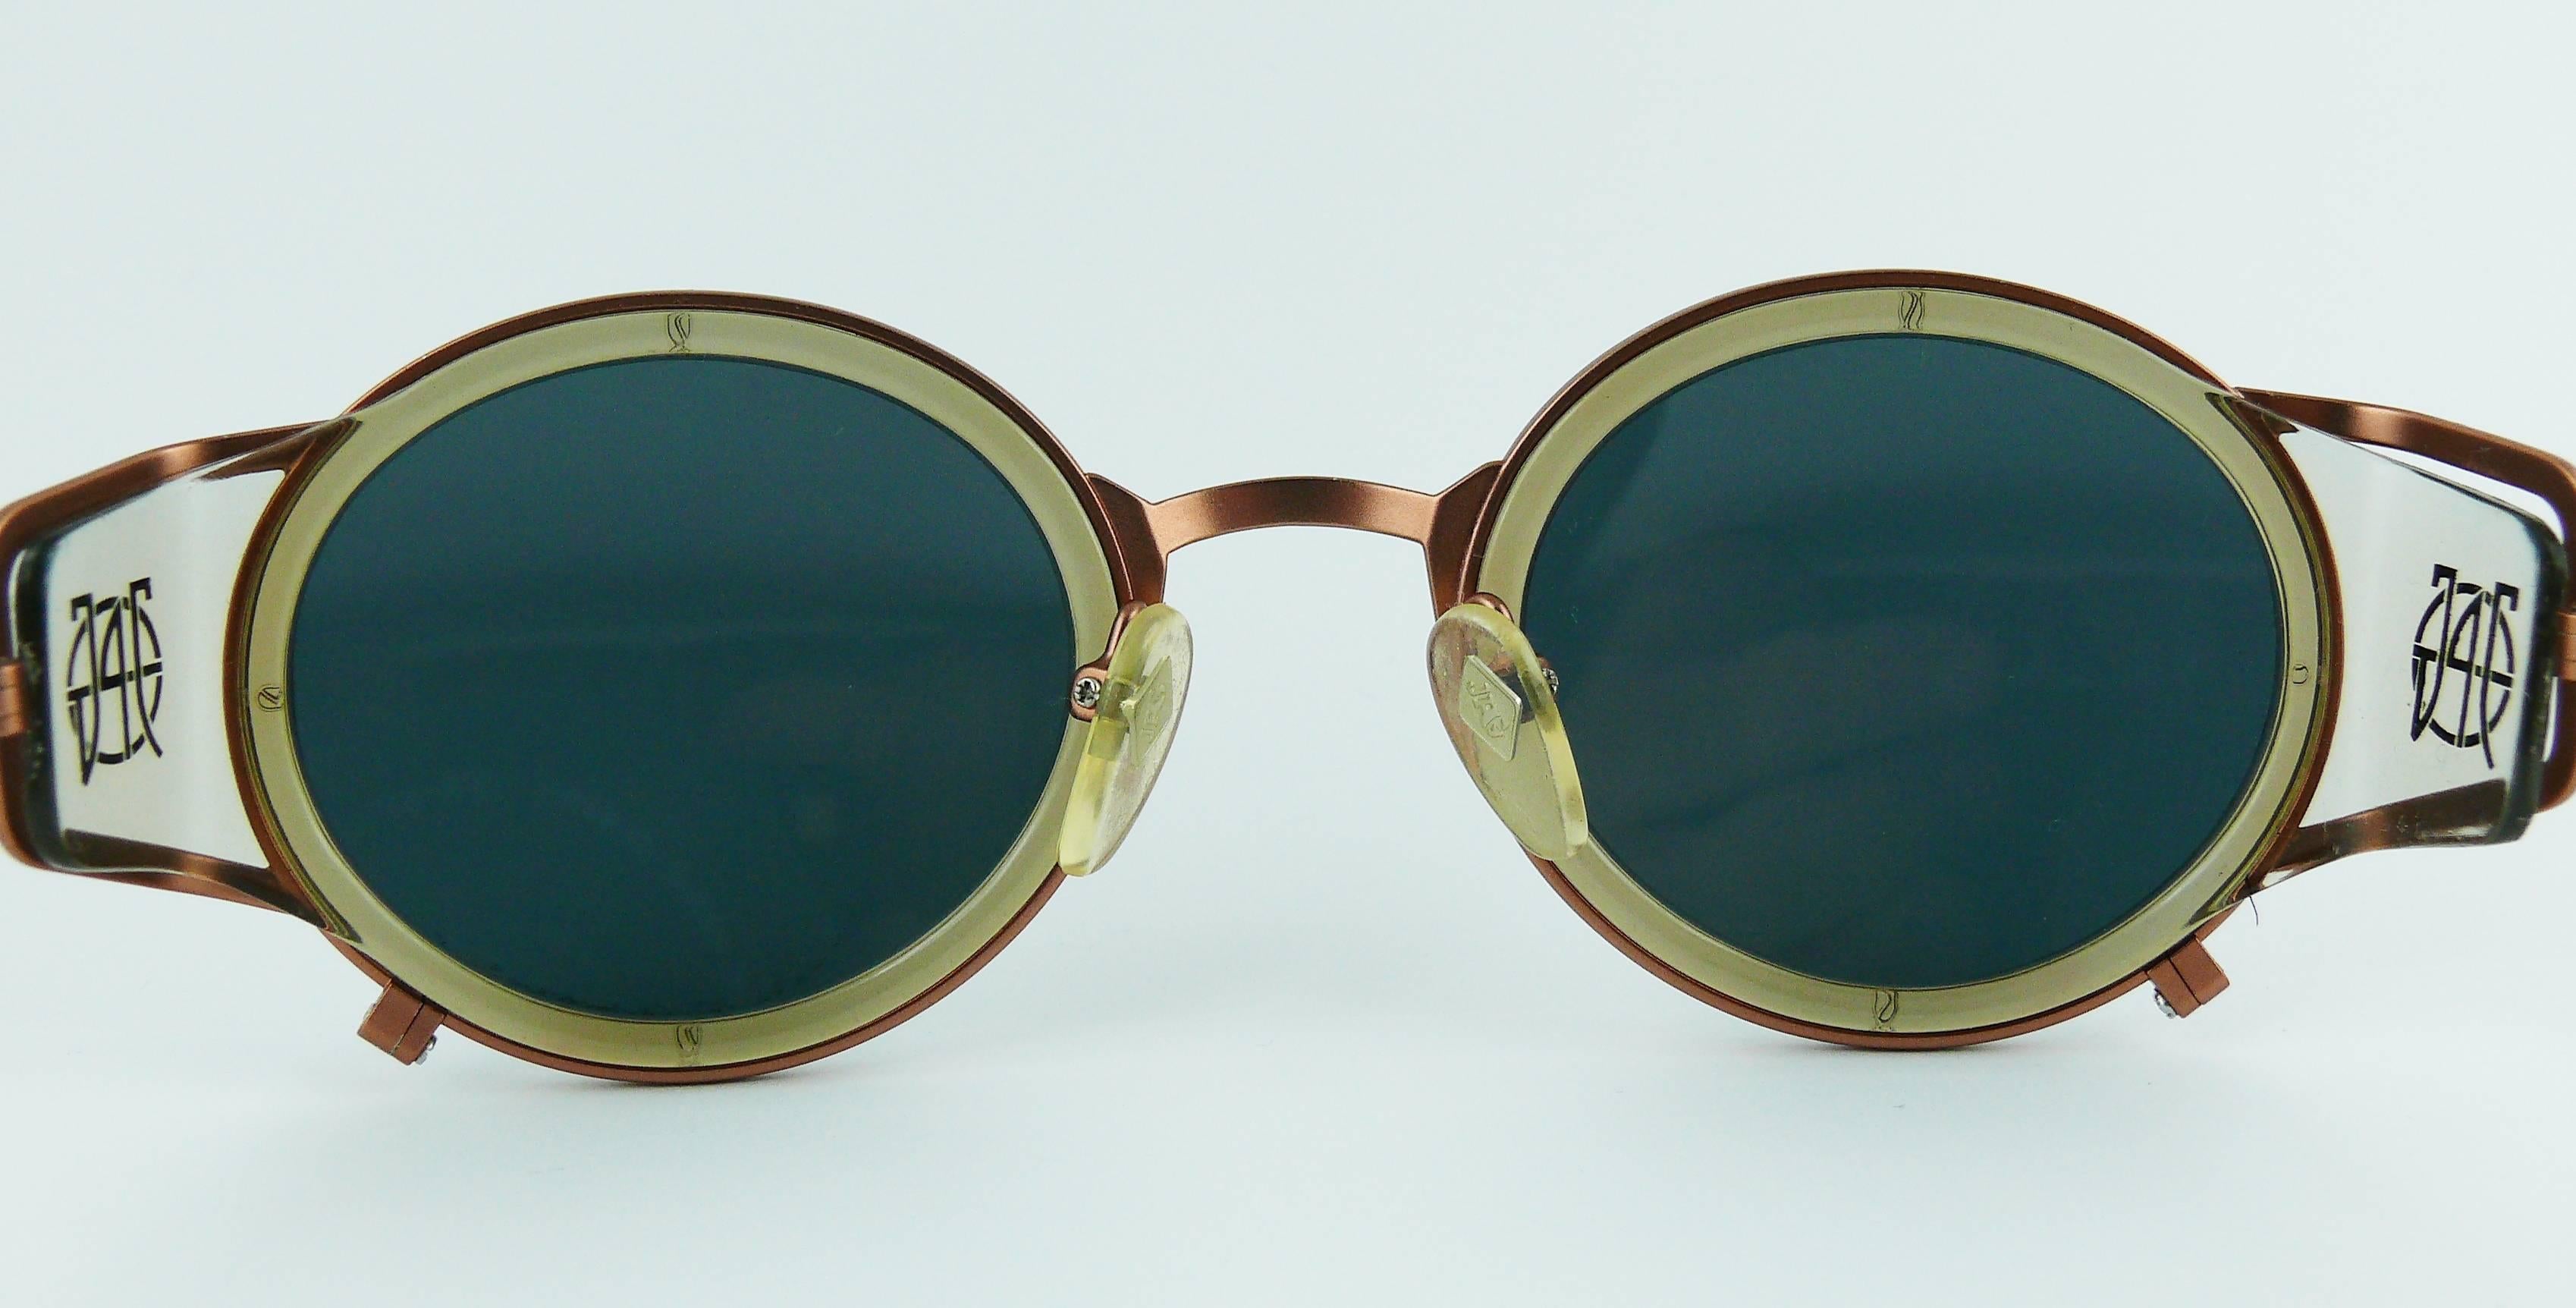 Jean Paul Gaultier Vintage Sunglasses with Side Shields 58-6201  1